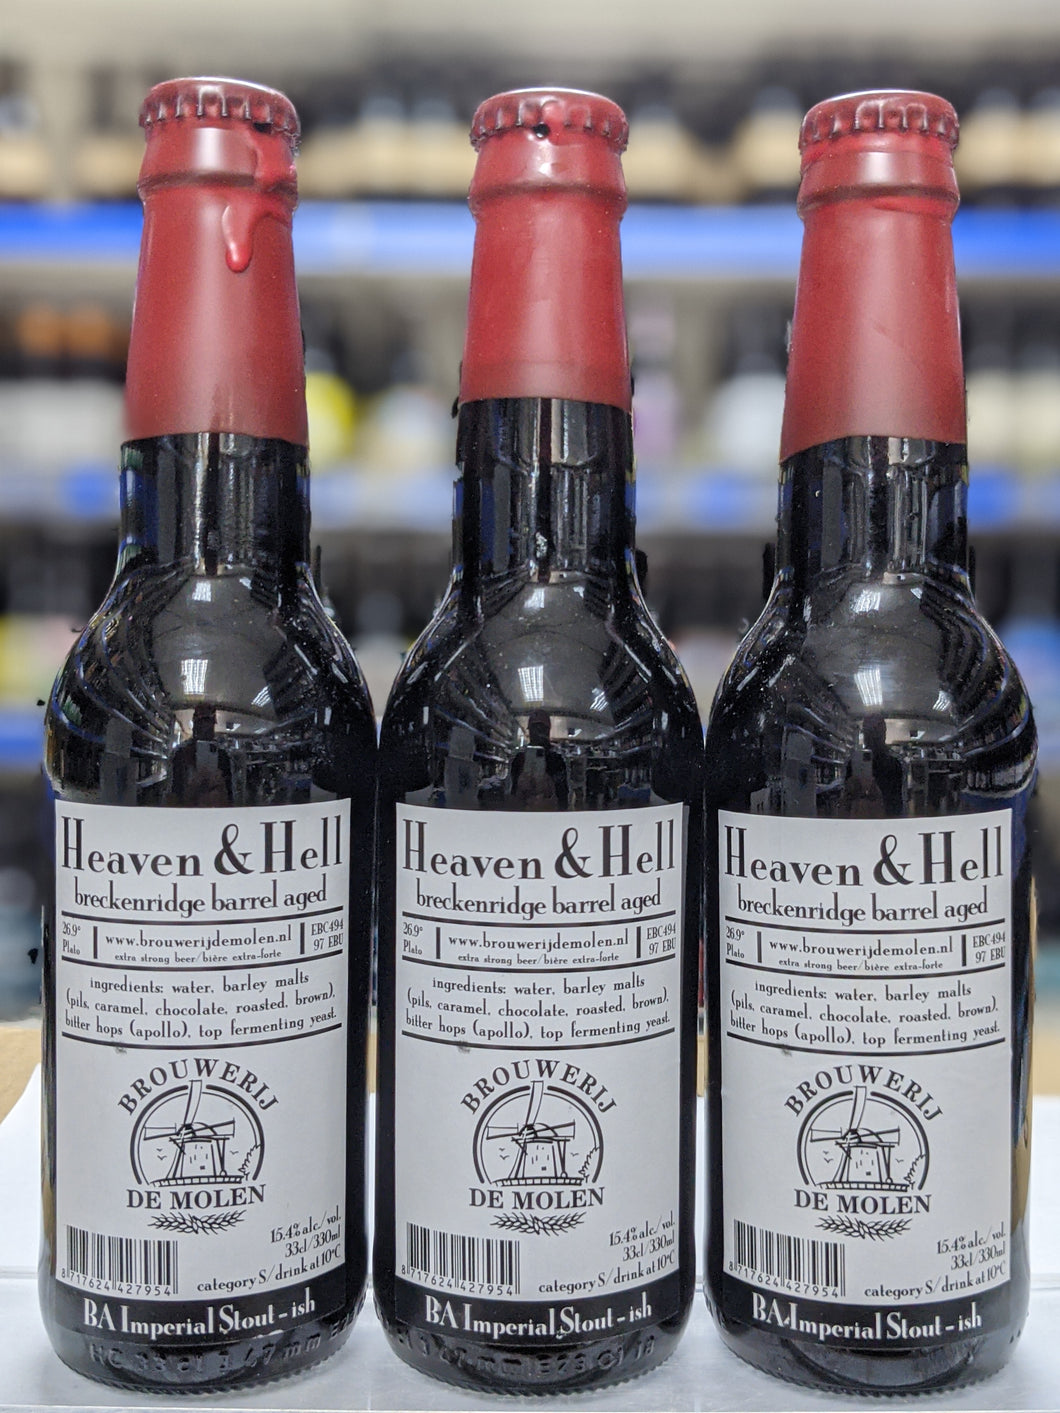 Heaven & Hell Breckenridge Barrel Aged  - Brouwerij De Molen - Breckenridge Barrel Aged Imperial Stout, 15.4%, 330ml Bottle